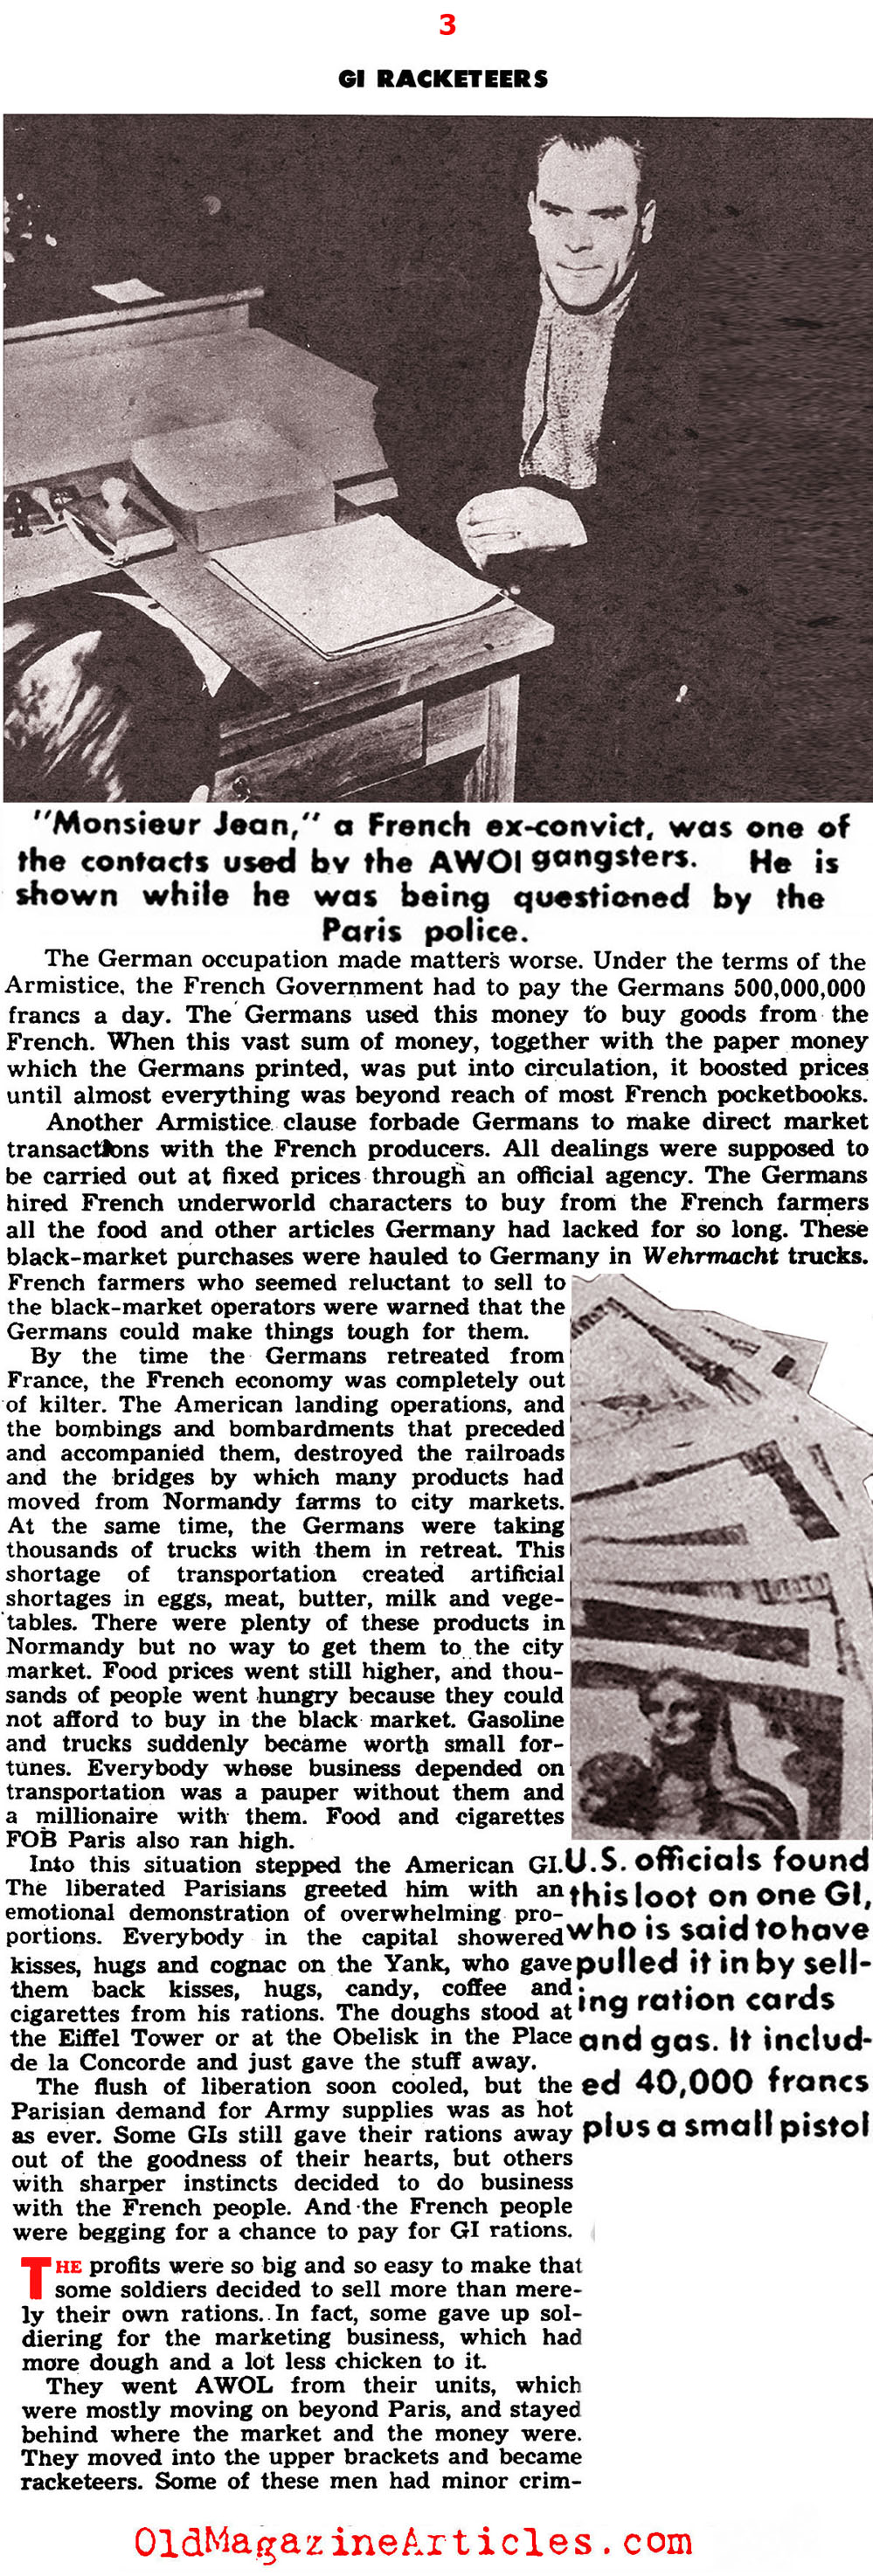 The AWOL GIs in the Black Market of Paris (Yank Magazine, 1945)